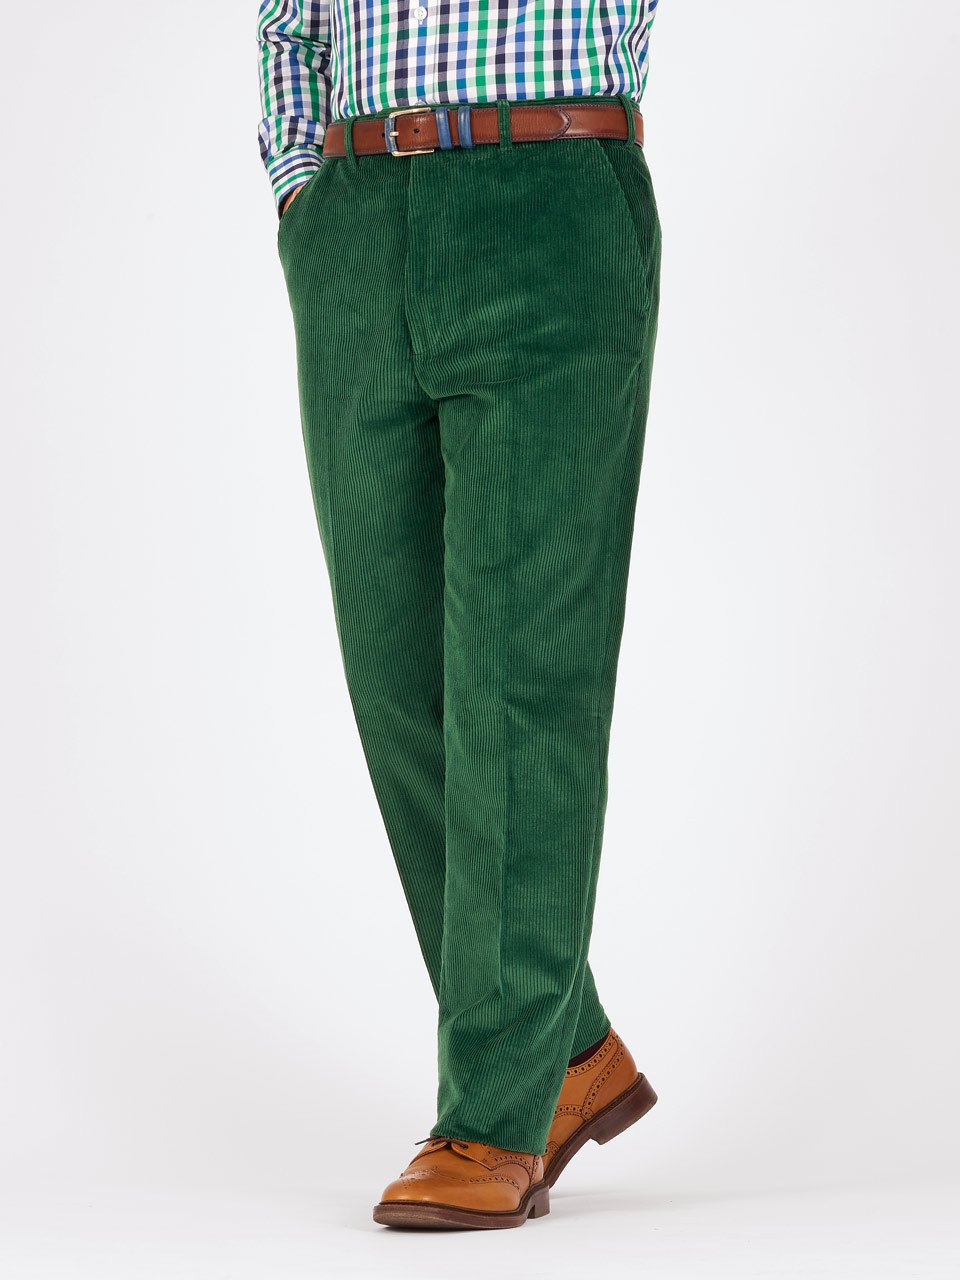 Wide Corduroy Trousers for Girls - fir green, Girls